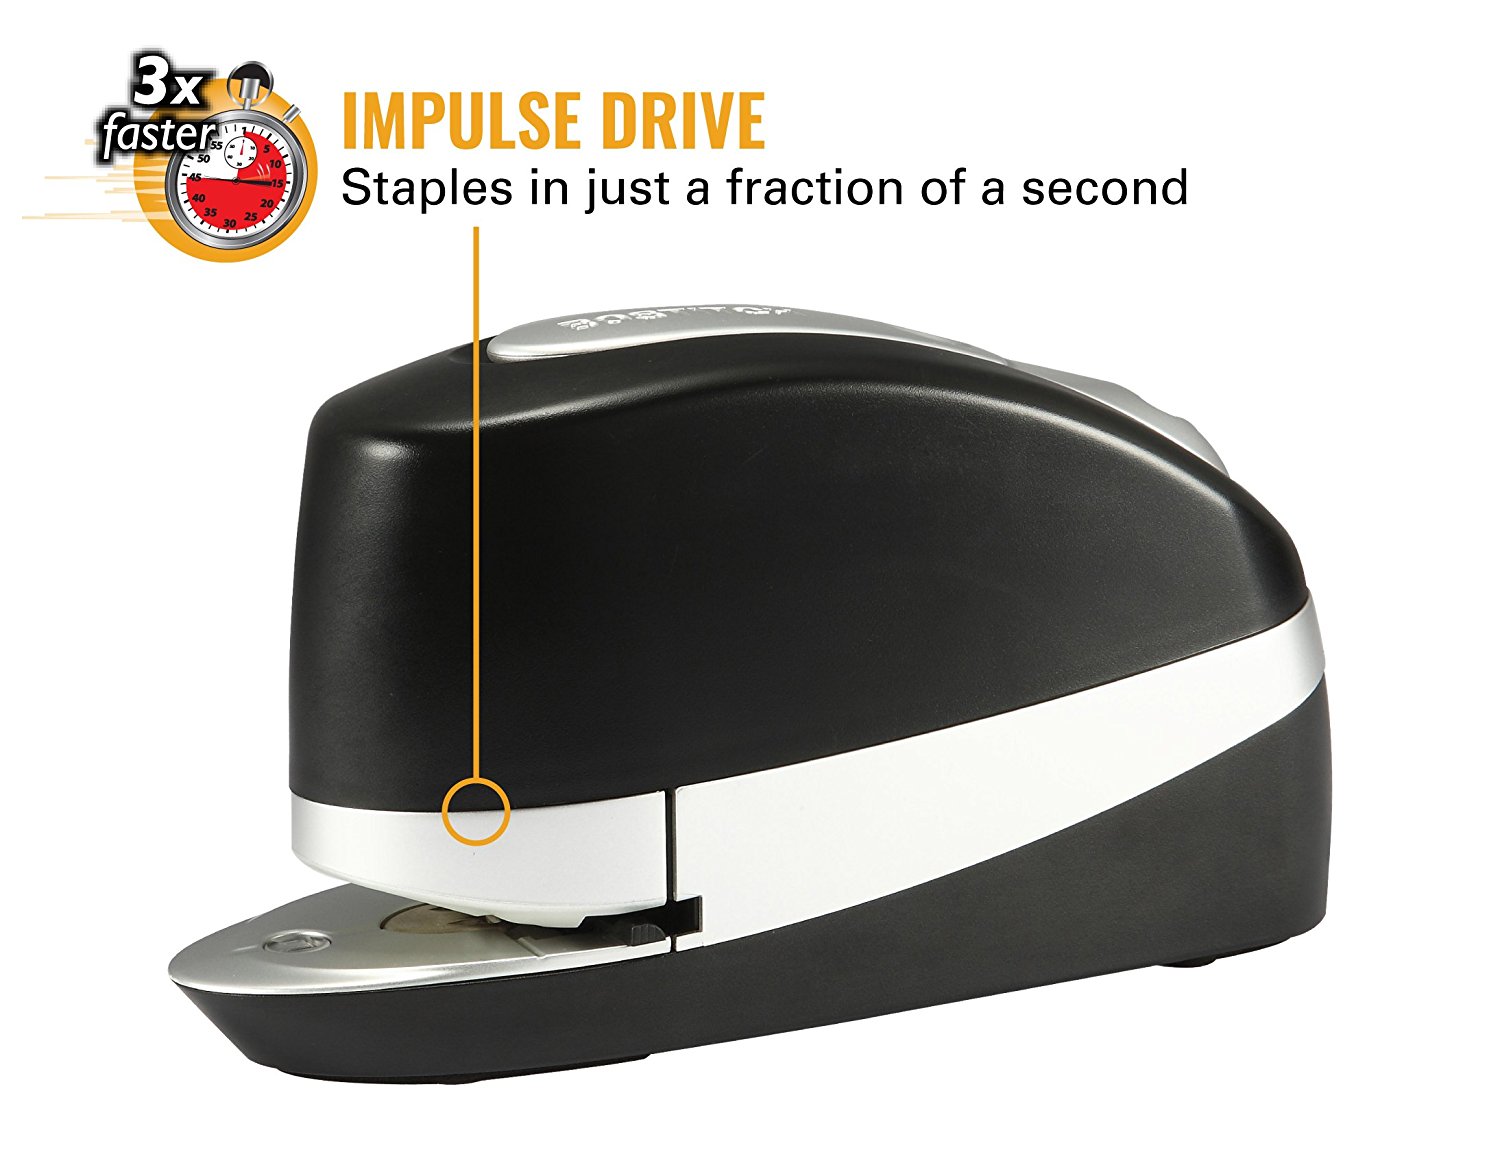 Impulse Drive Design for 3x Faster Stapling Speed